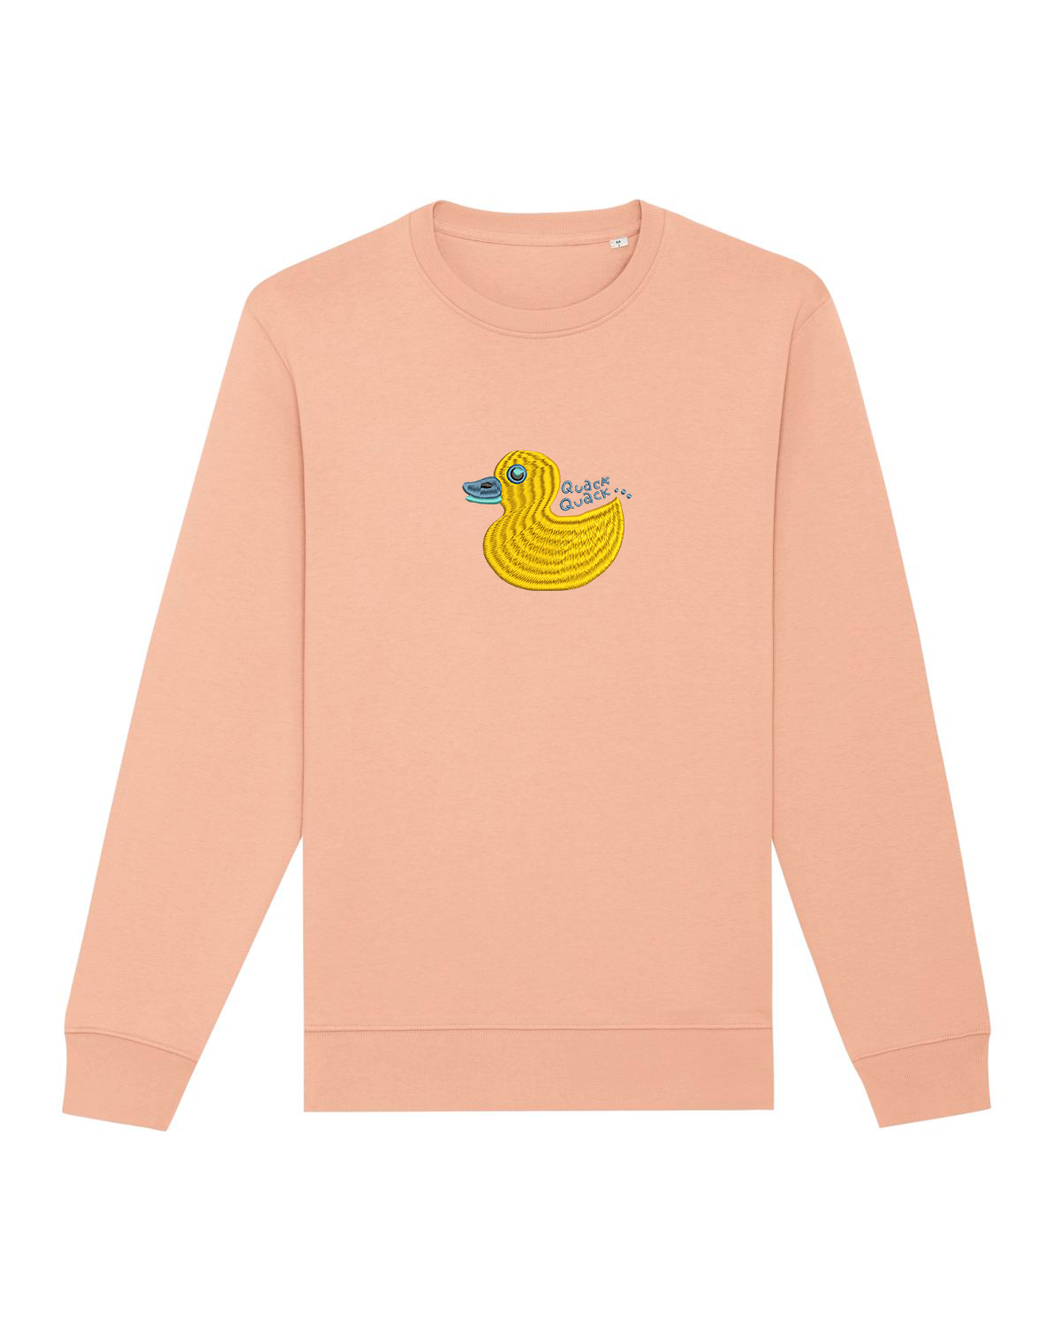 Quack, Quack 🦆- Embroidered KIDS Sweatshirt